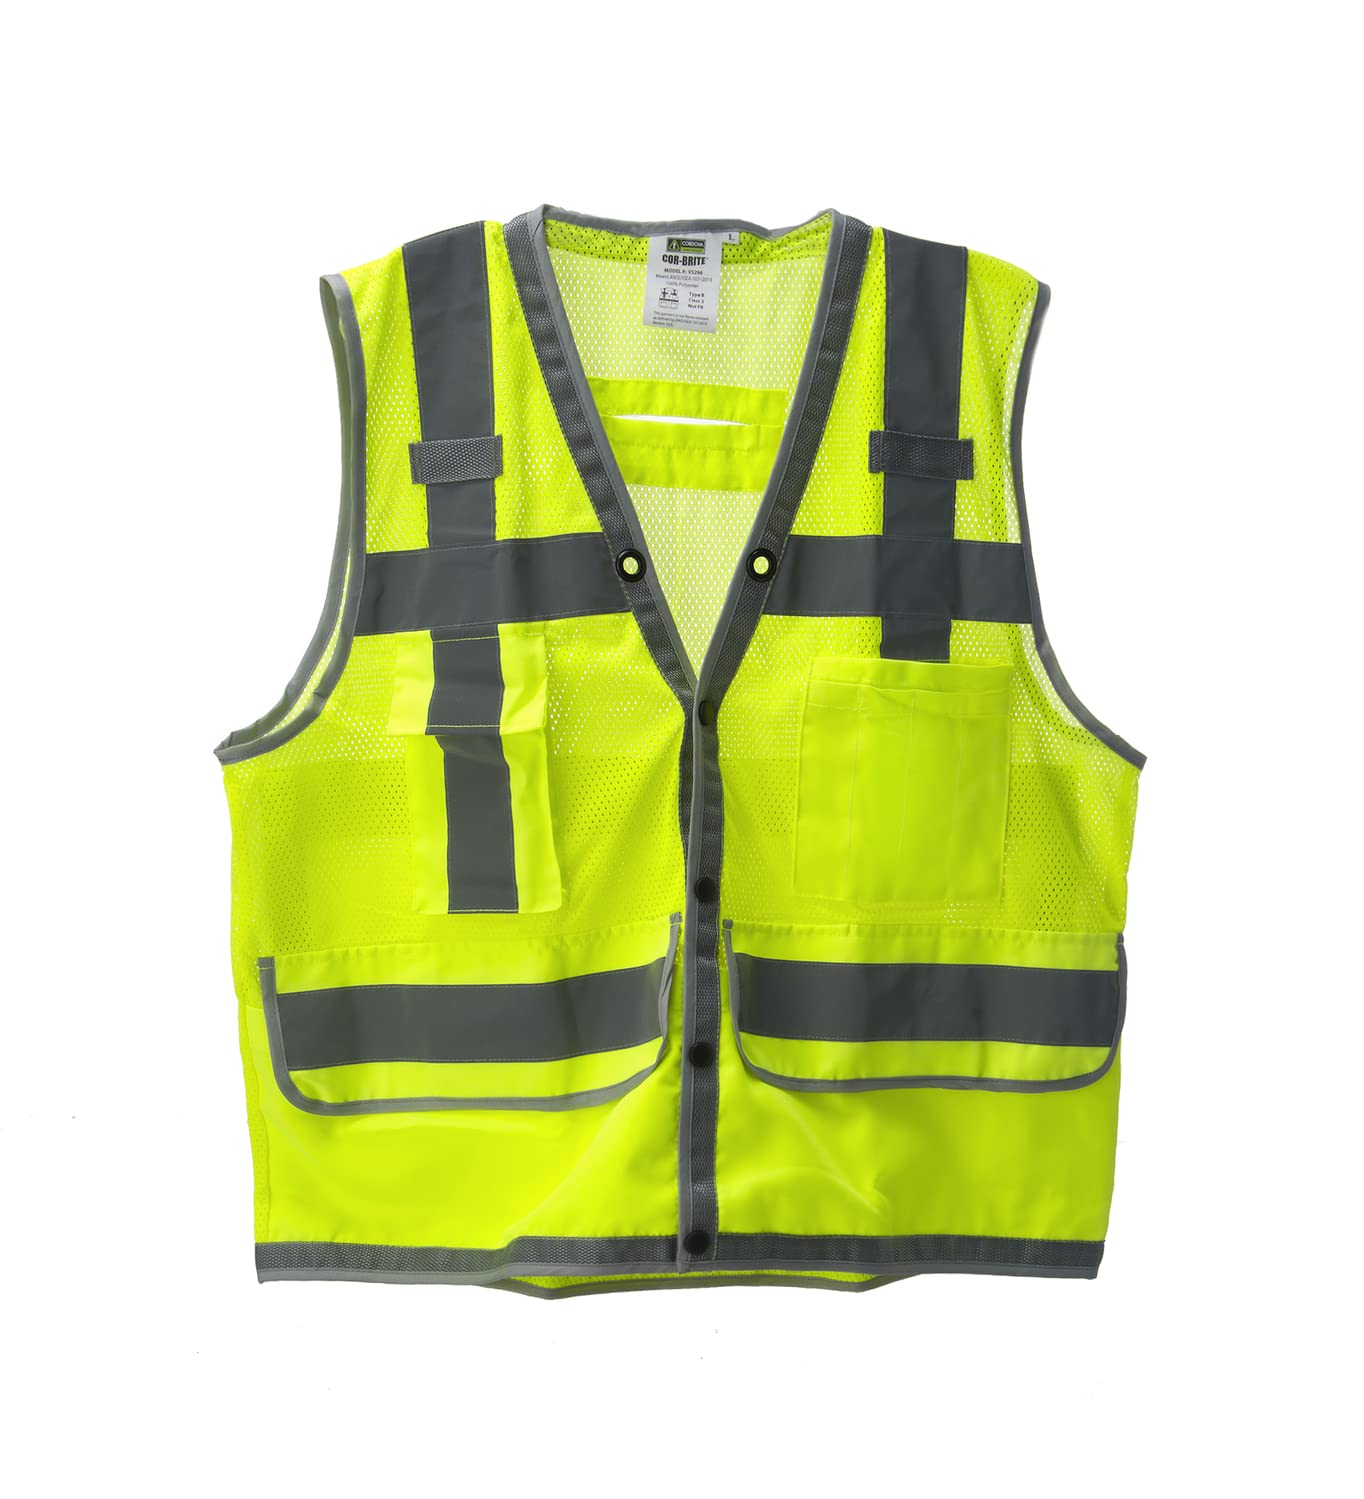 Type R, Class 2, Heavy Duty Surveyor's Safety Vest, High-Visibility